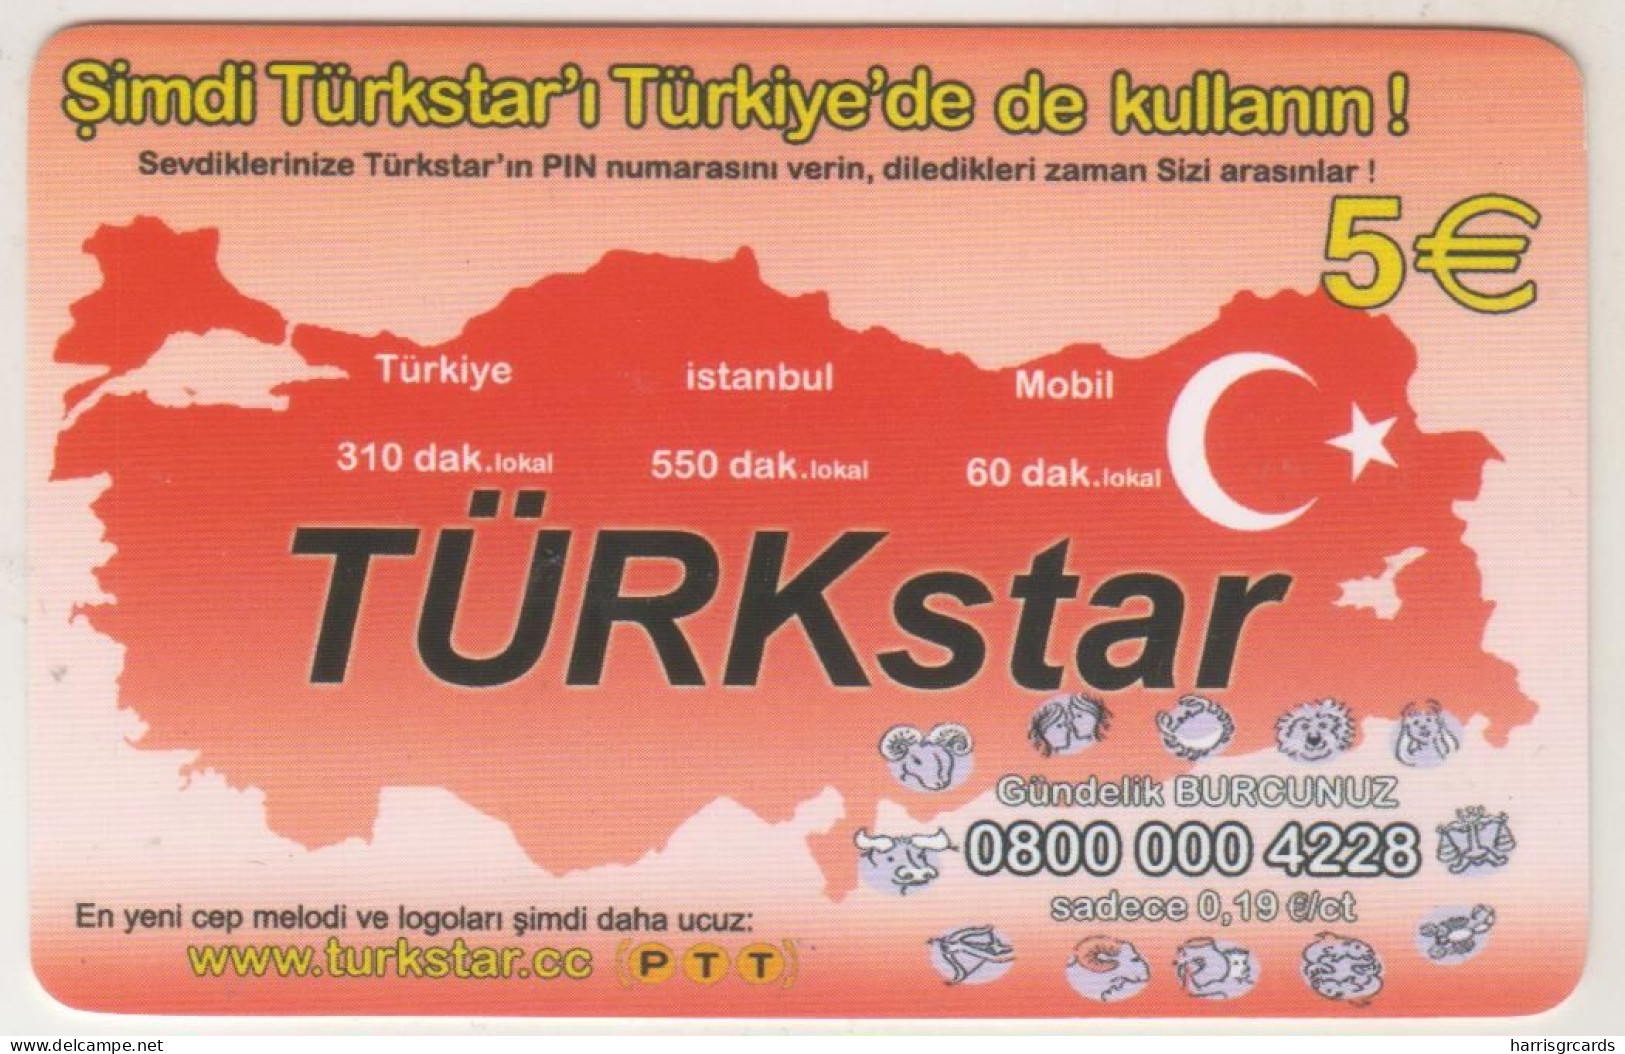 GERMANY - PTT - TÜRKstar (5€) 0800 2000 938 , Prepaid Card , Used - [2] Móviles Tarjetas Prepagadas & Recargos